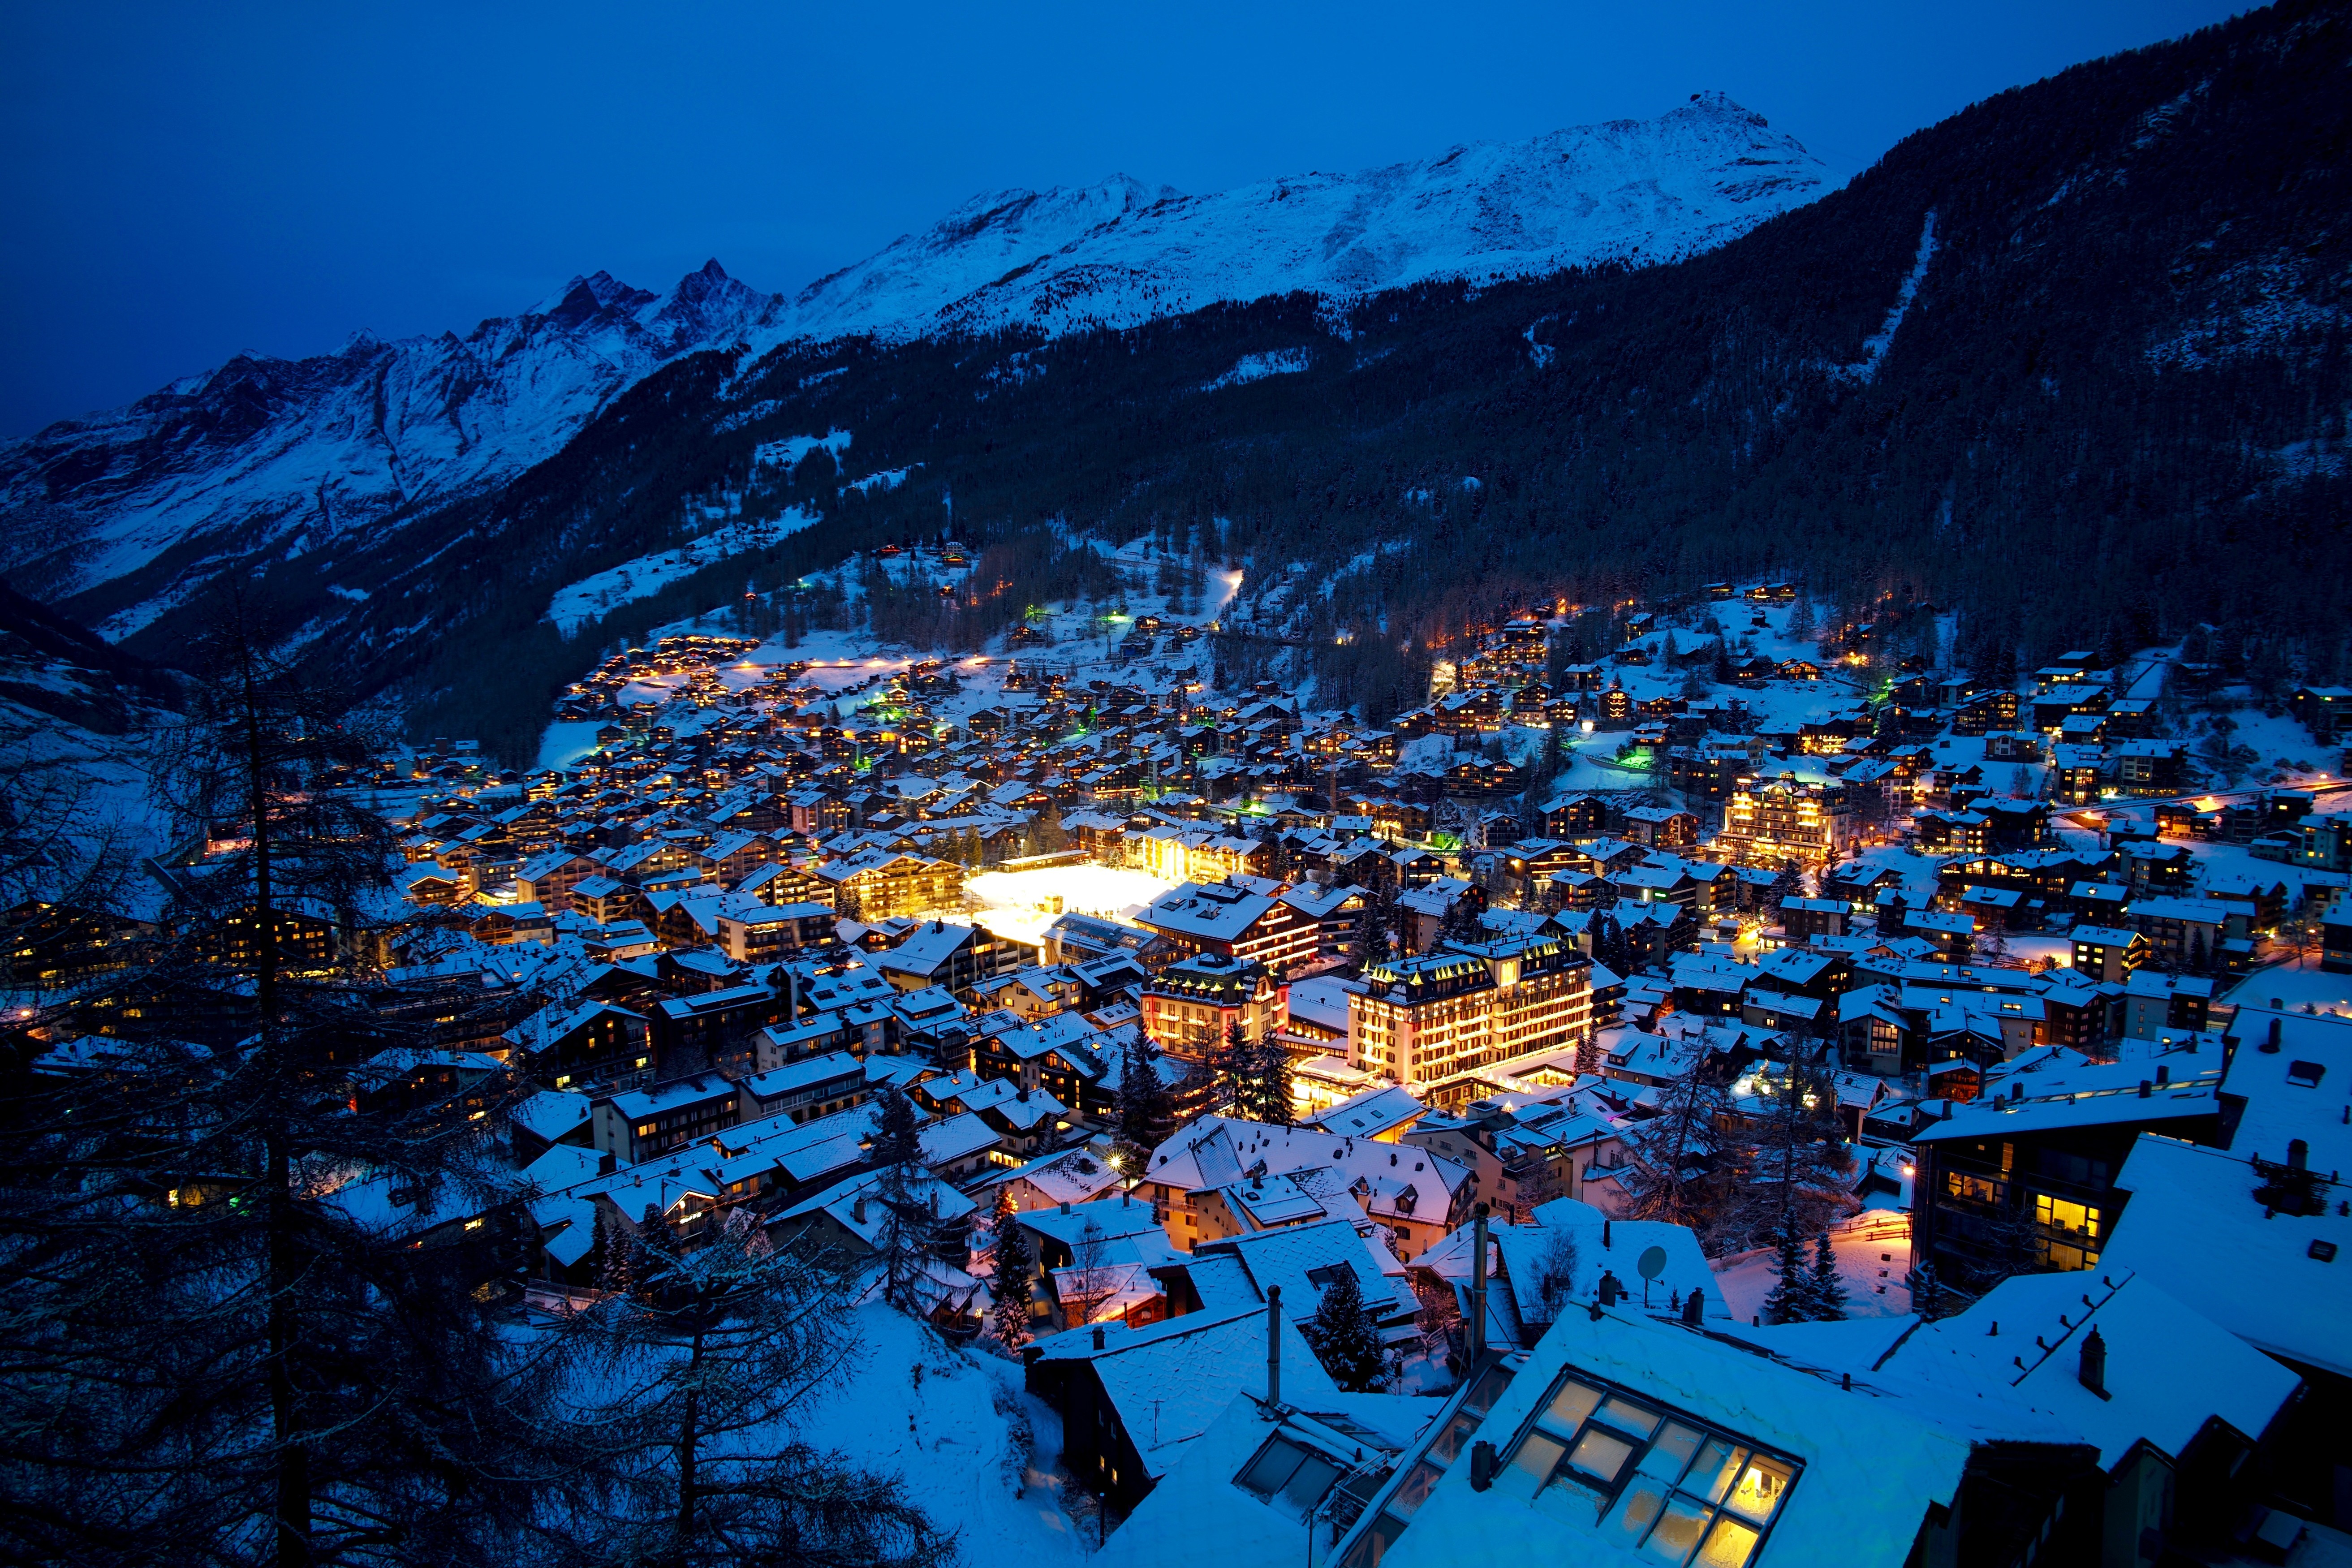 Zermatt Snow Alps Landscape Lights Mountains Switzerland Night City Lights 5250x3500